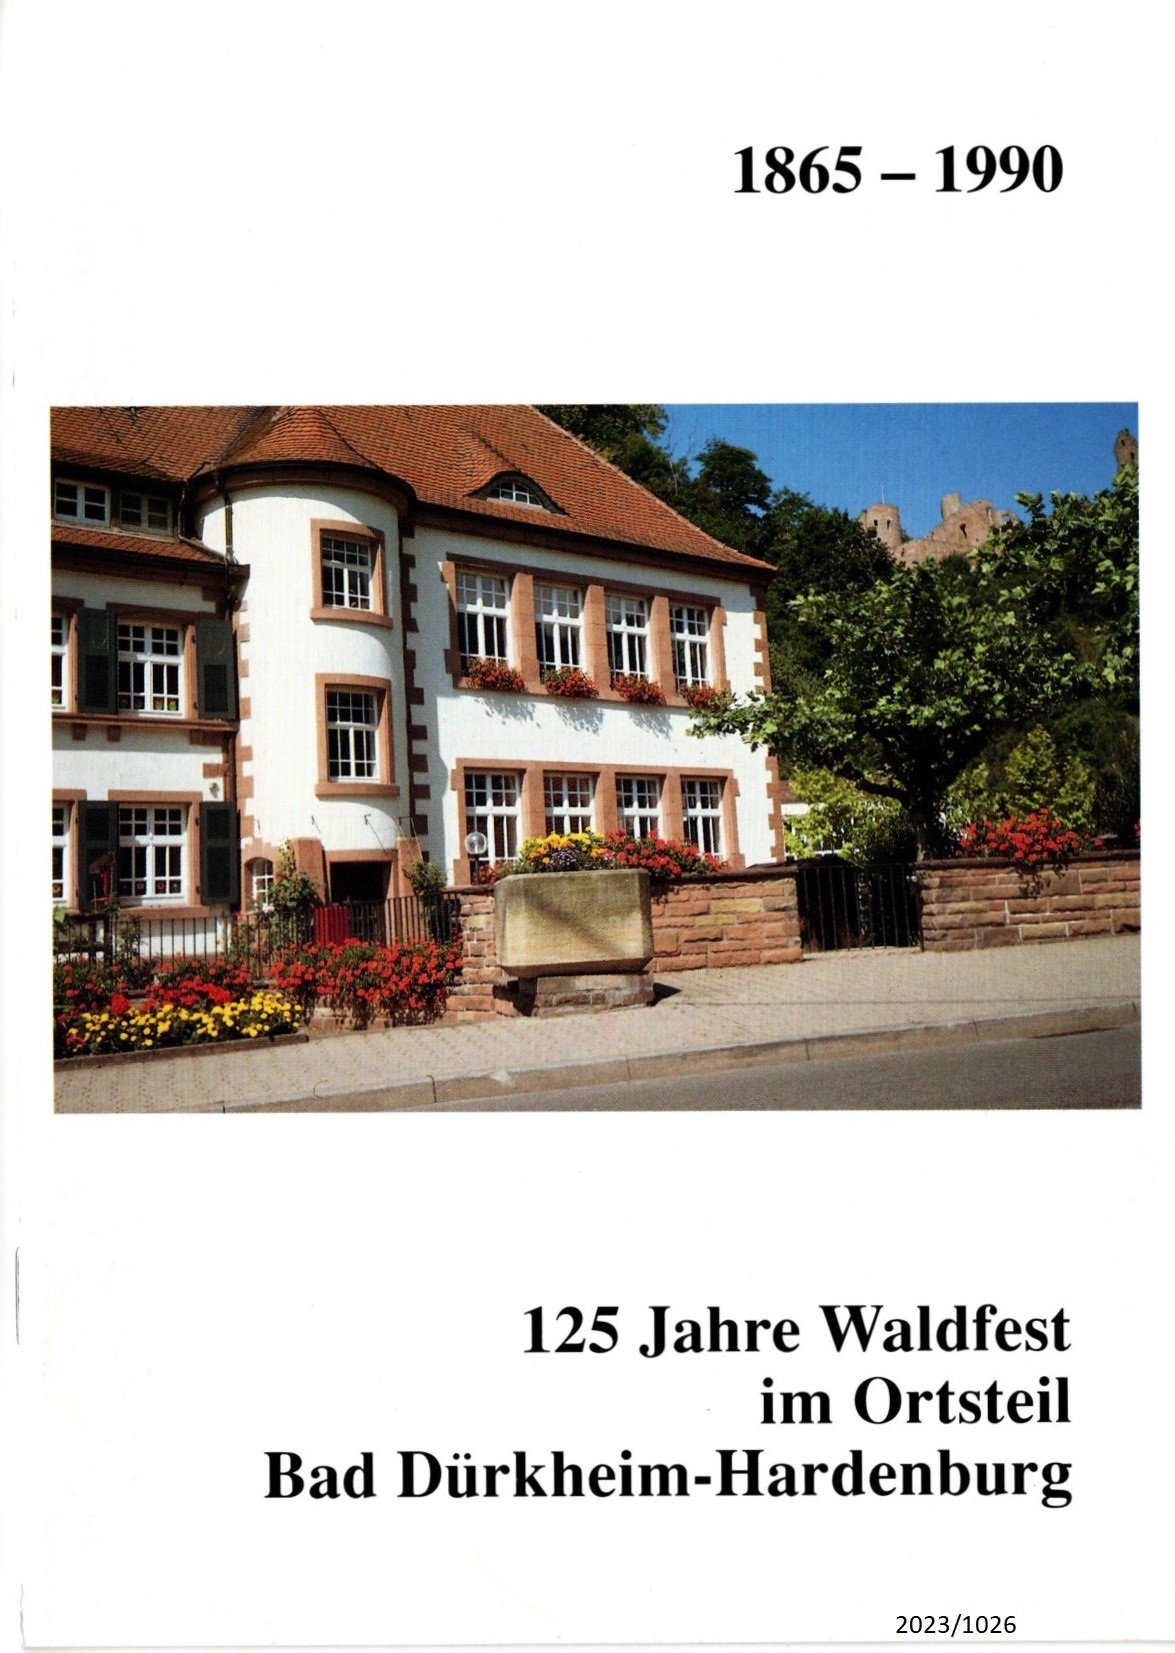 125 Waldfest im Ortsteil Bad Dürkheim-Hardenburg (Stadtmuseum Bad Dürkheim im Kulturzentrum Haus Catoir CC BY-NC-SA)